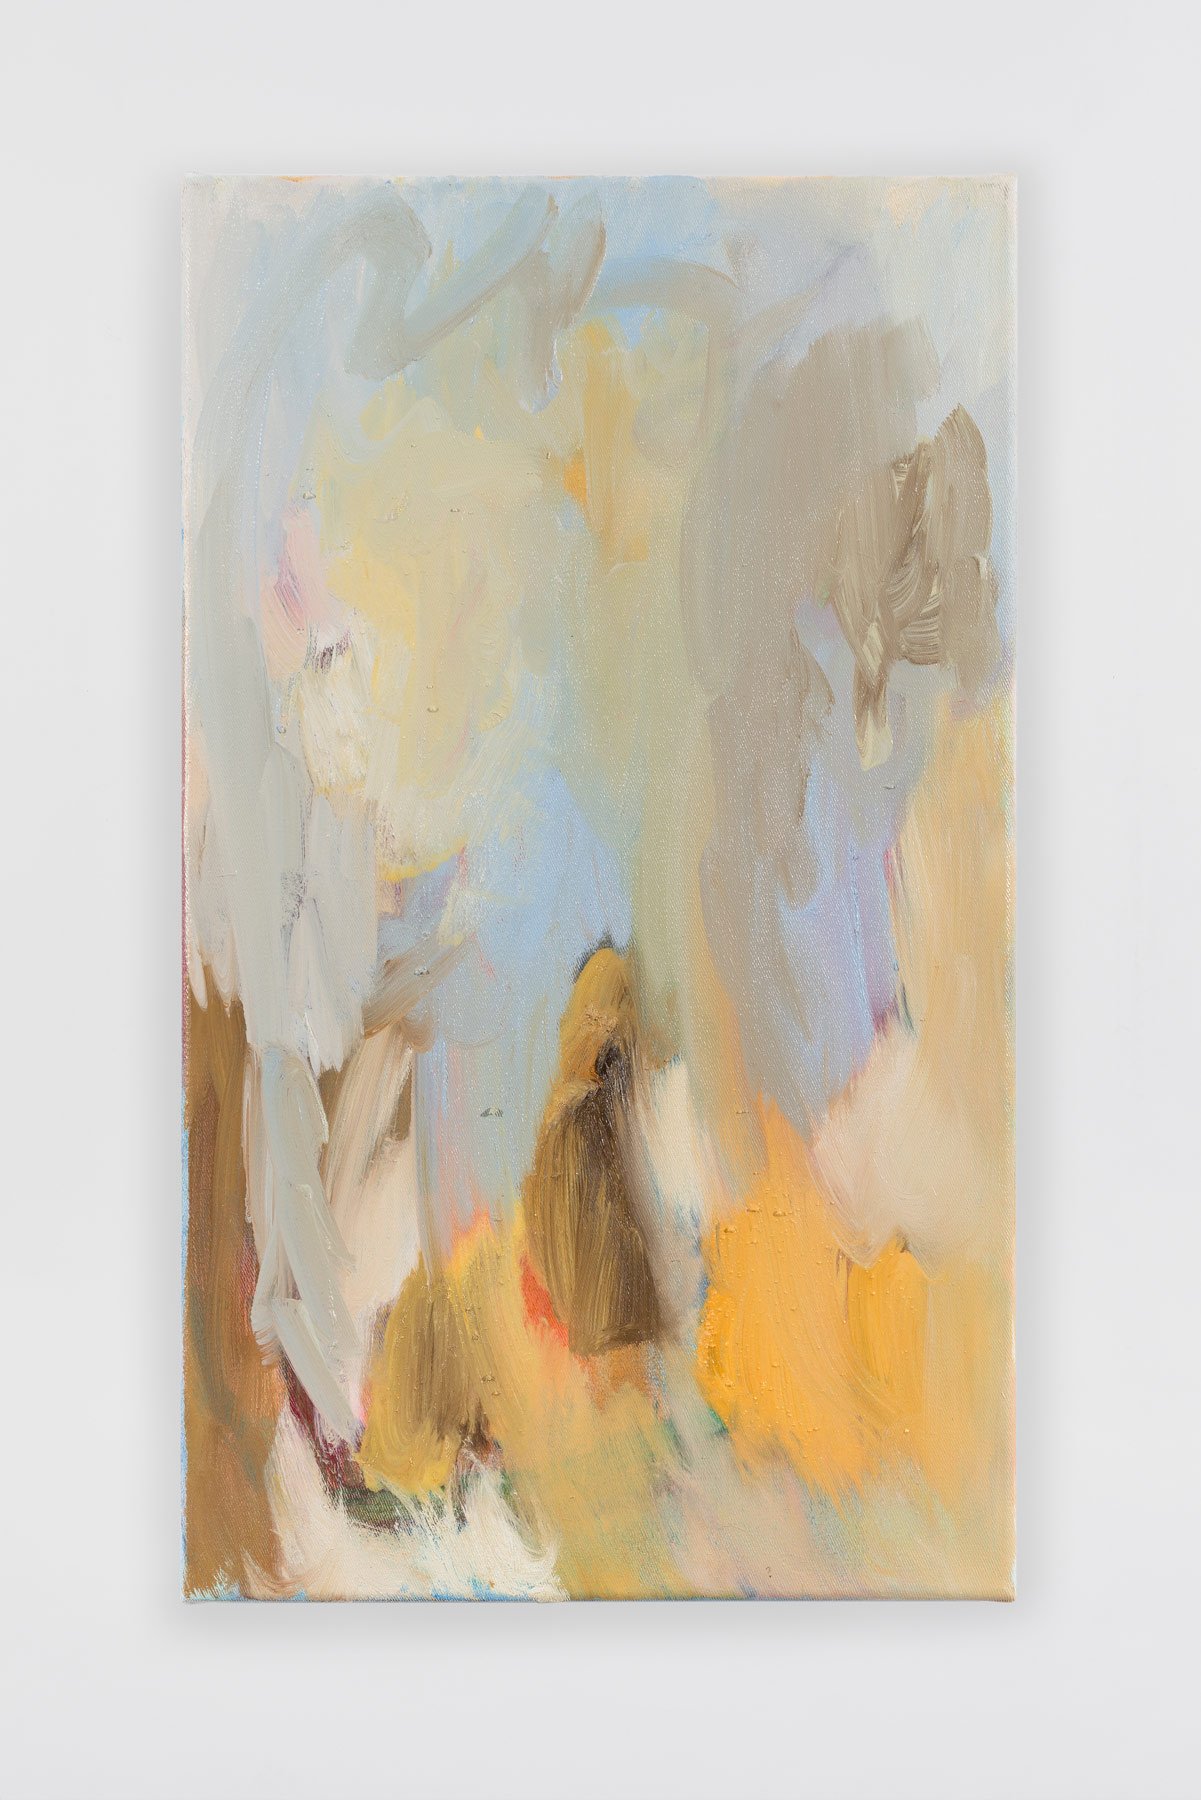 B01 - 1221, 2021, oil on canvas, 60 x 35 cm